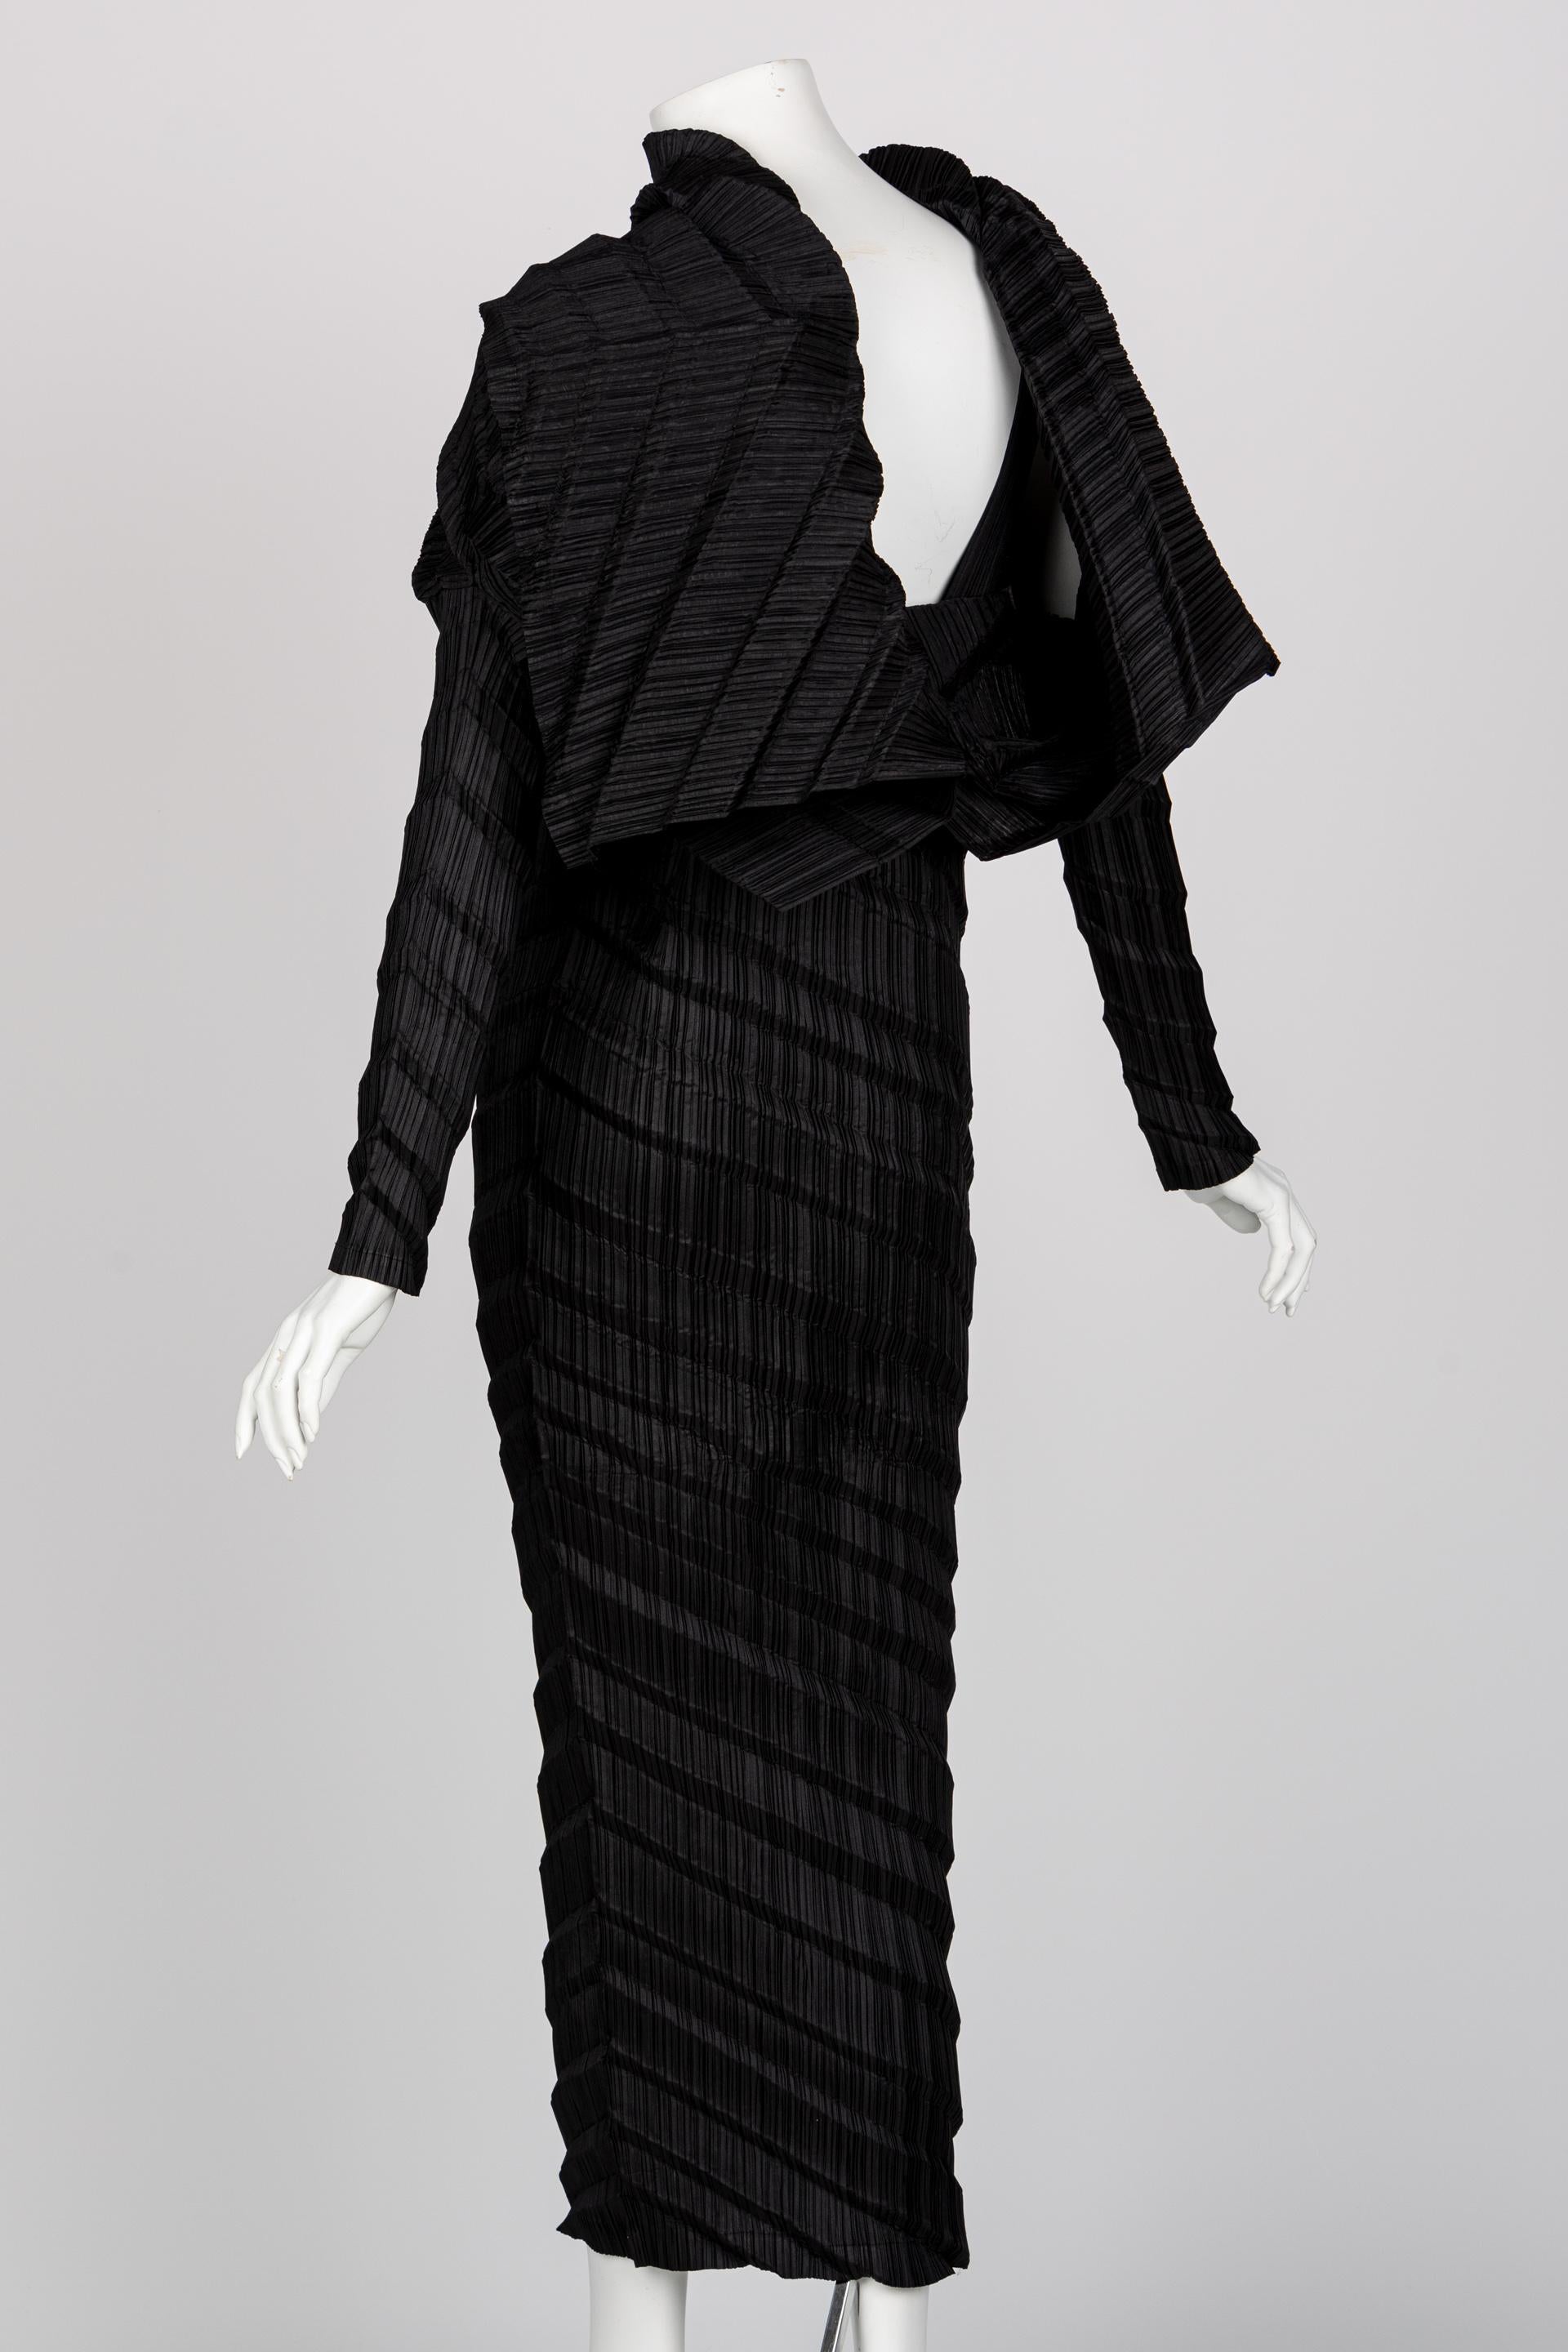 Issey Miyake Black Pleated Sculptural Dress, 1990s 2